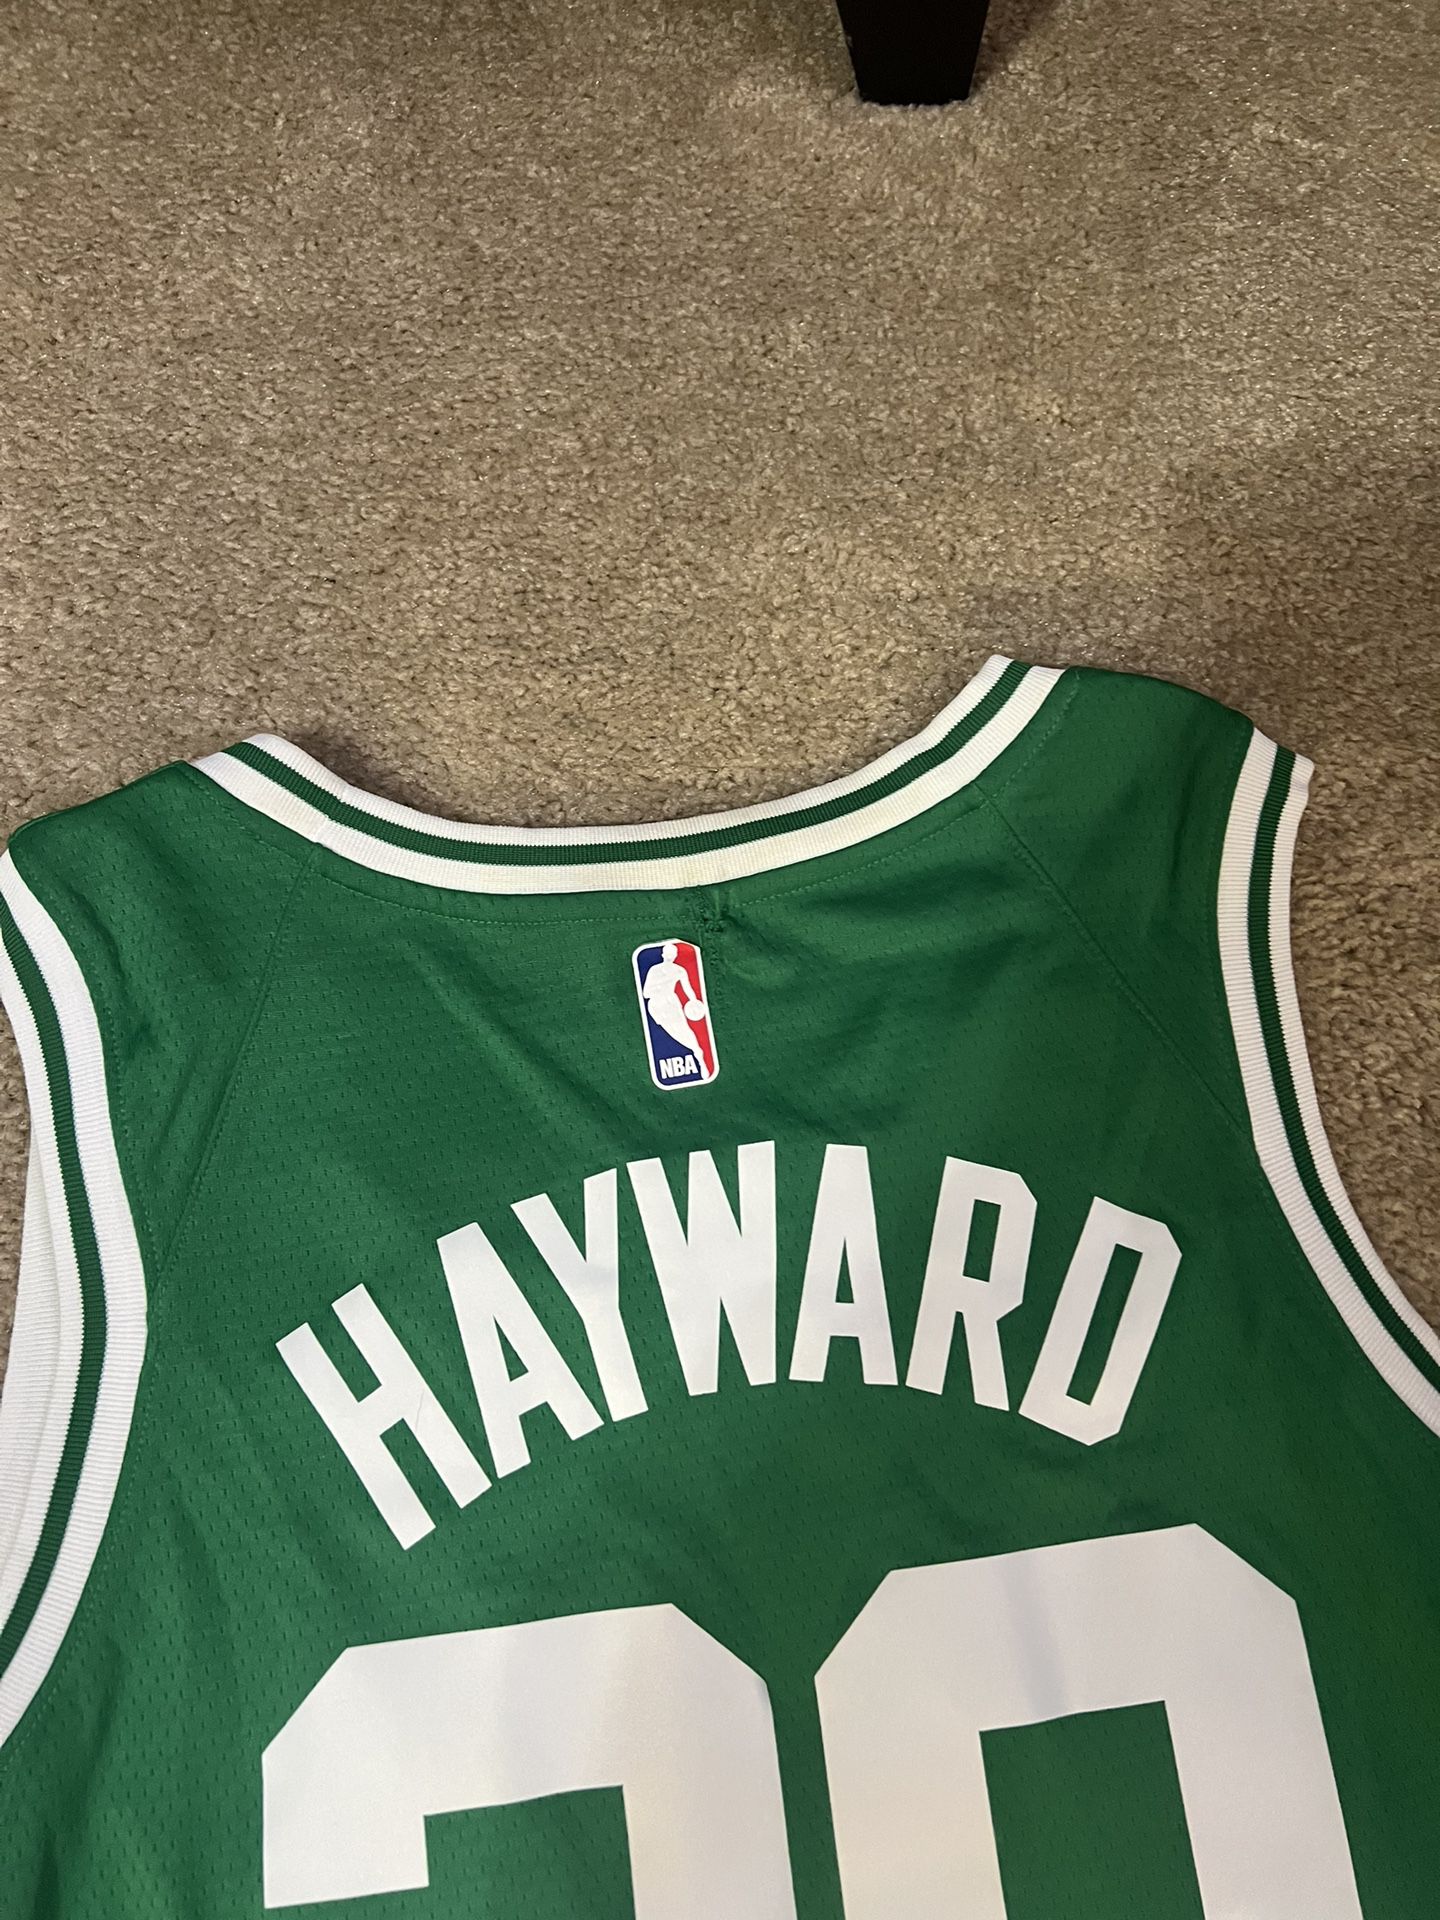 Gordon Hayward Boston Celtics Jersey Men Large Nike Swingman NBA